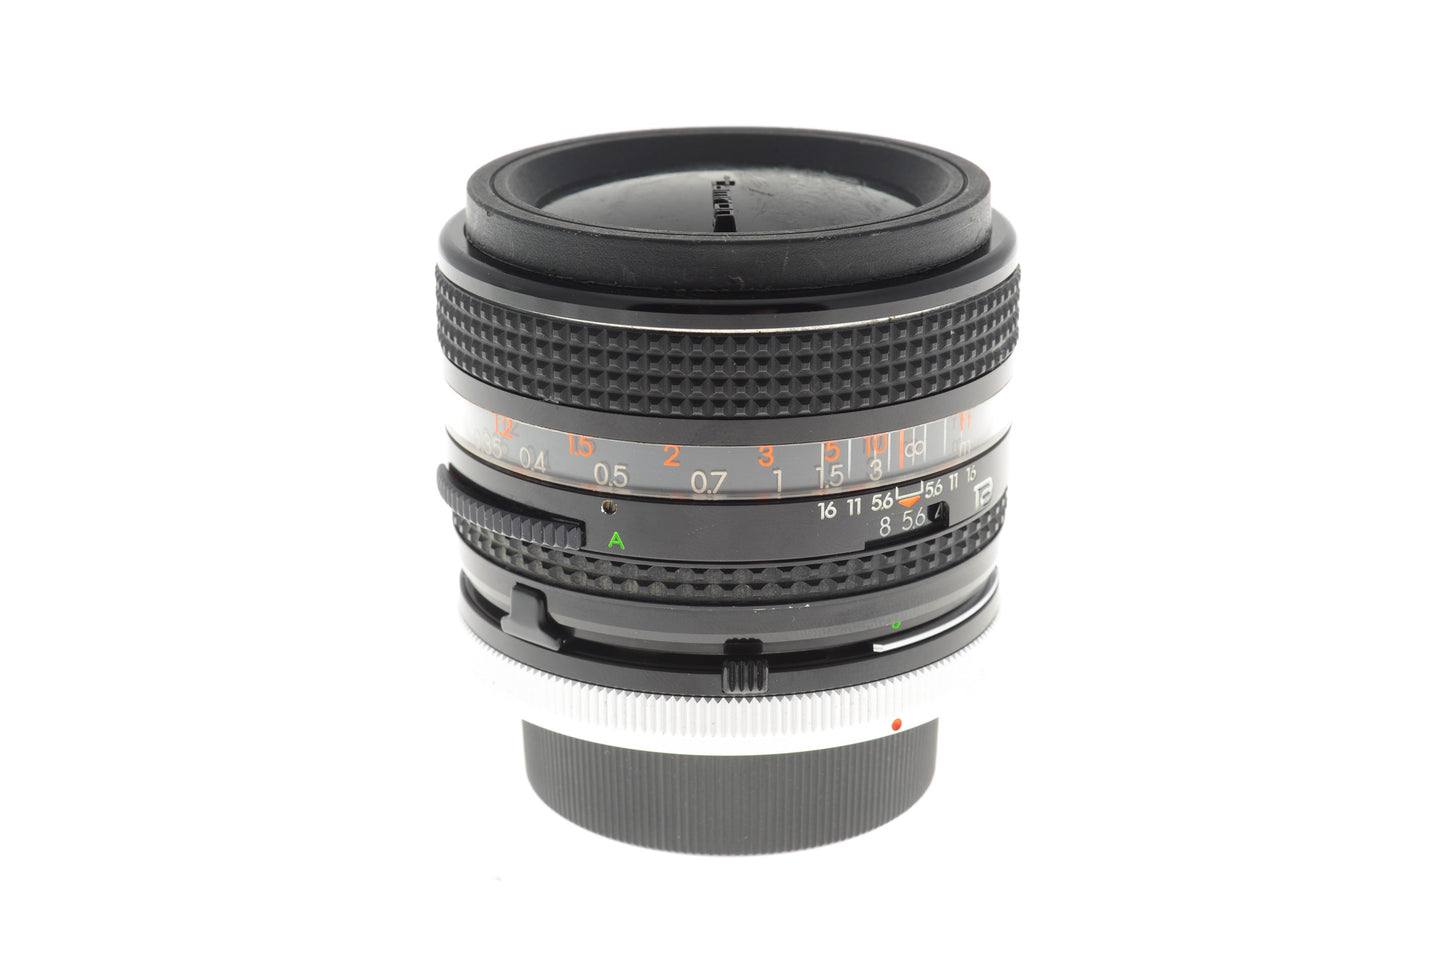 Tamron 28mm f2.8 Auto - Lens